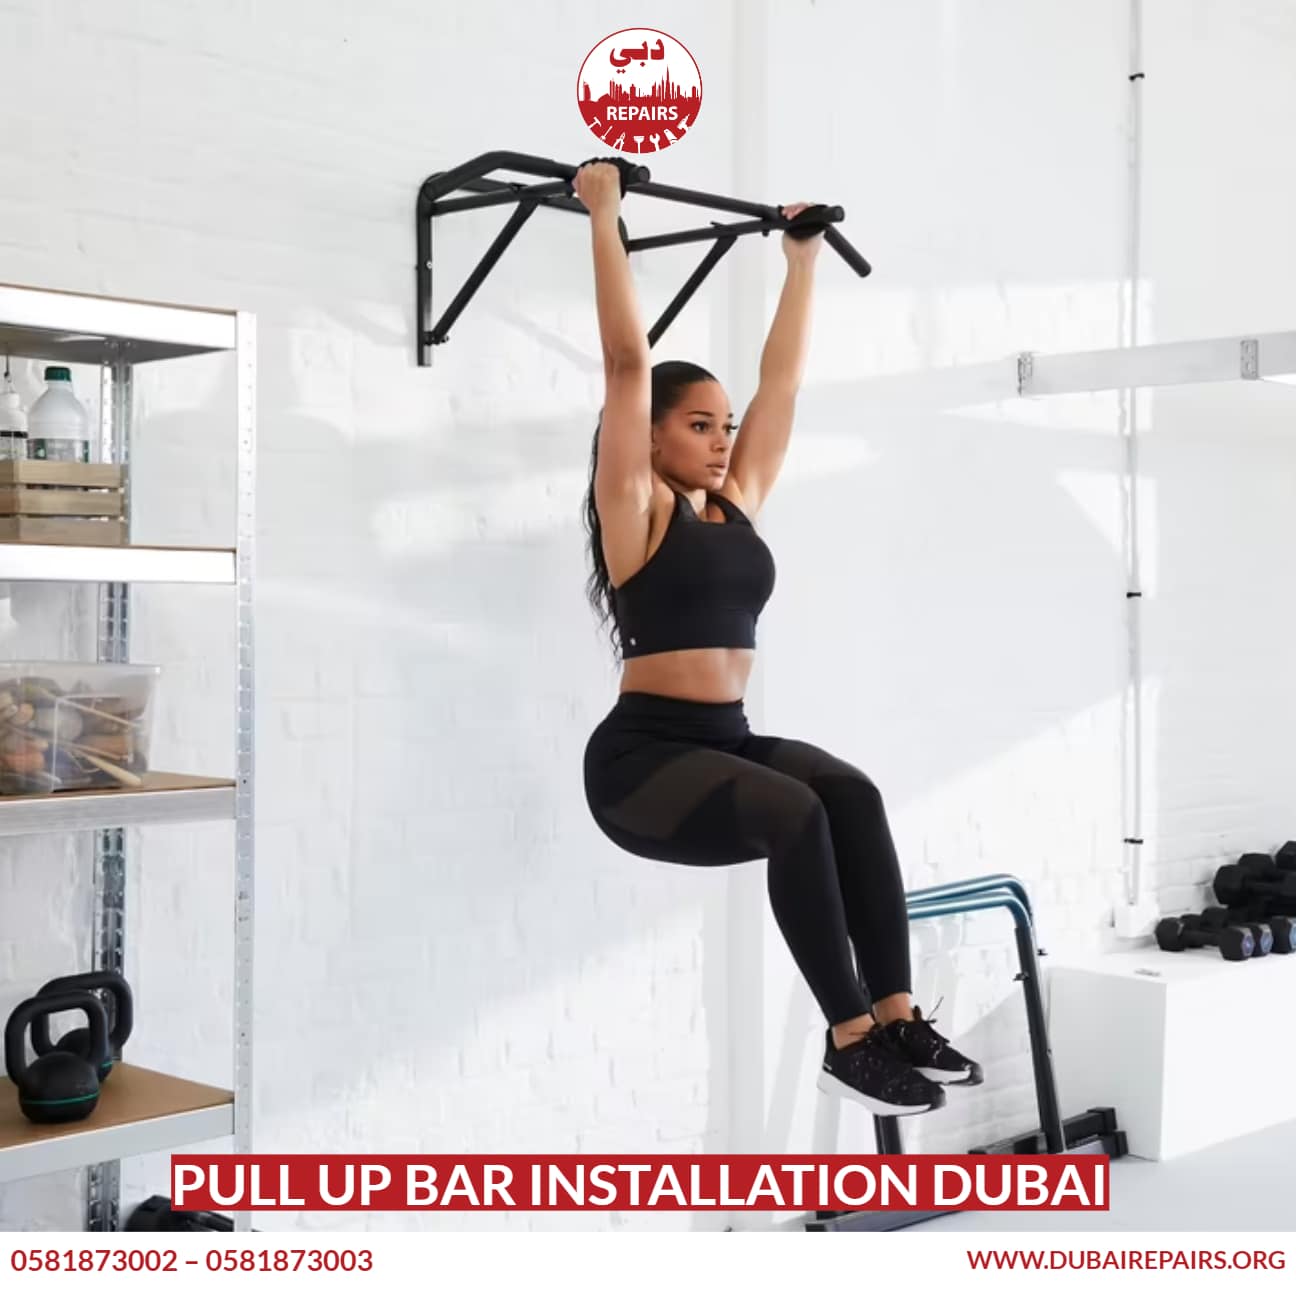 Pull Up Bar Installation Dubai - 0581873003 - Dubai Repairs